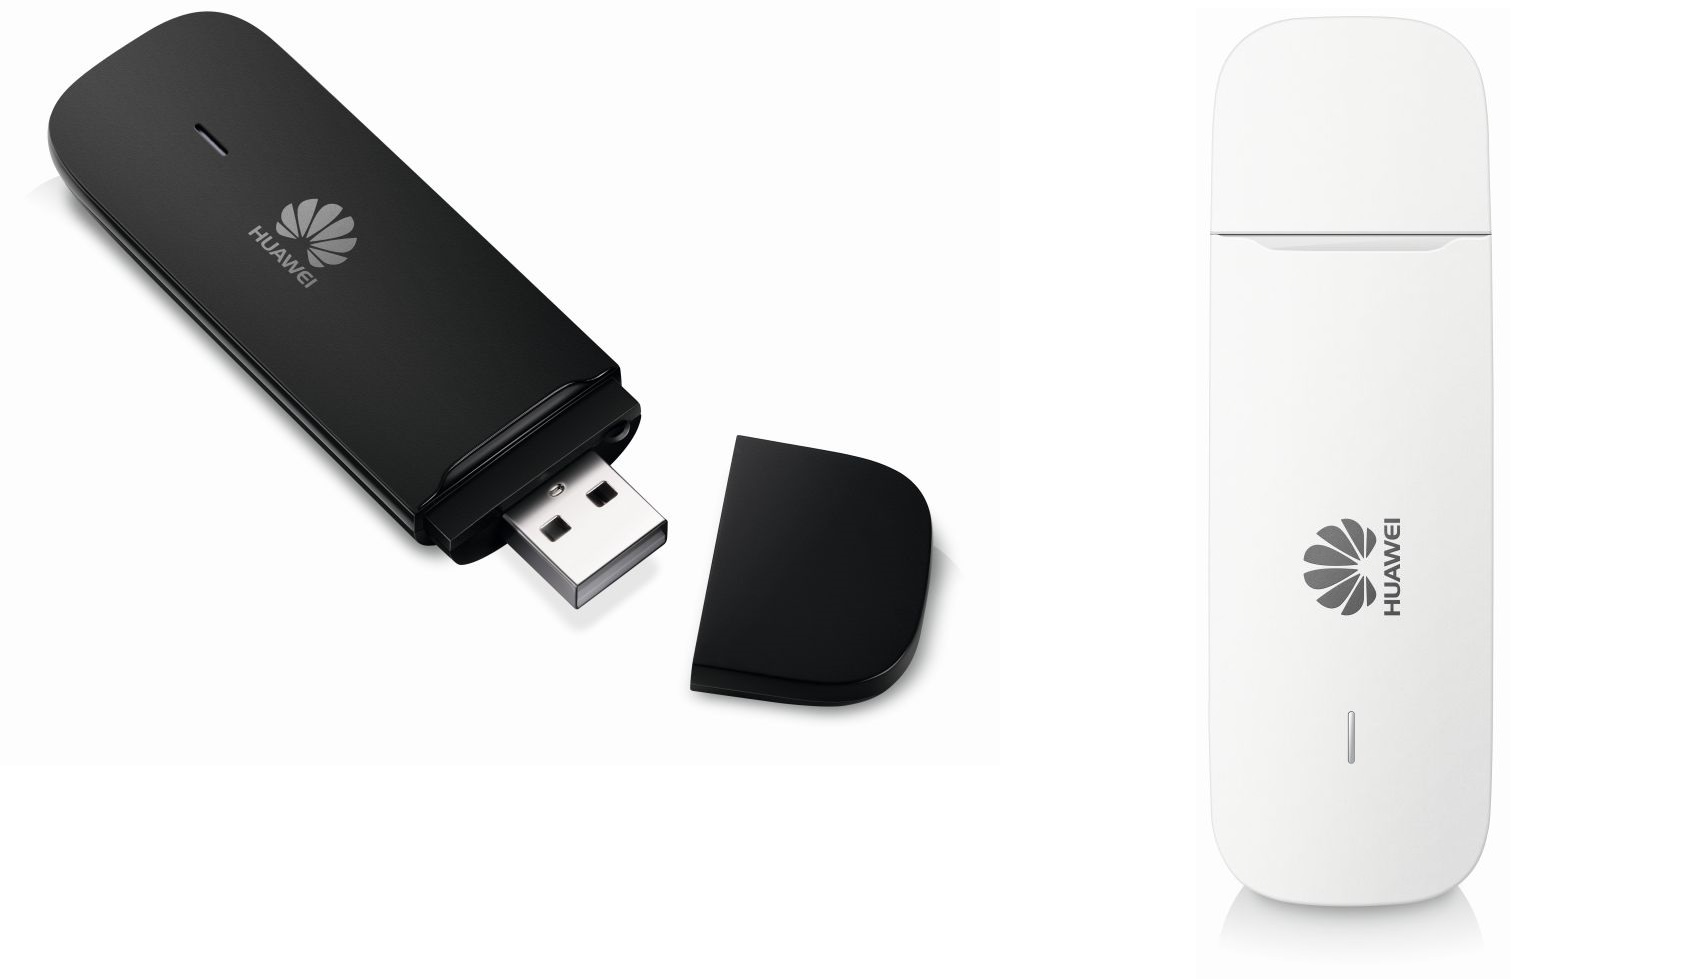 Huawei New Hilink USB Stick – 4G LTE Mall